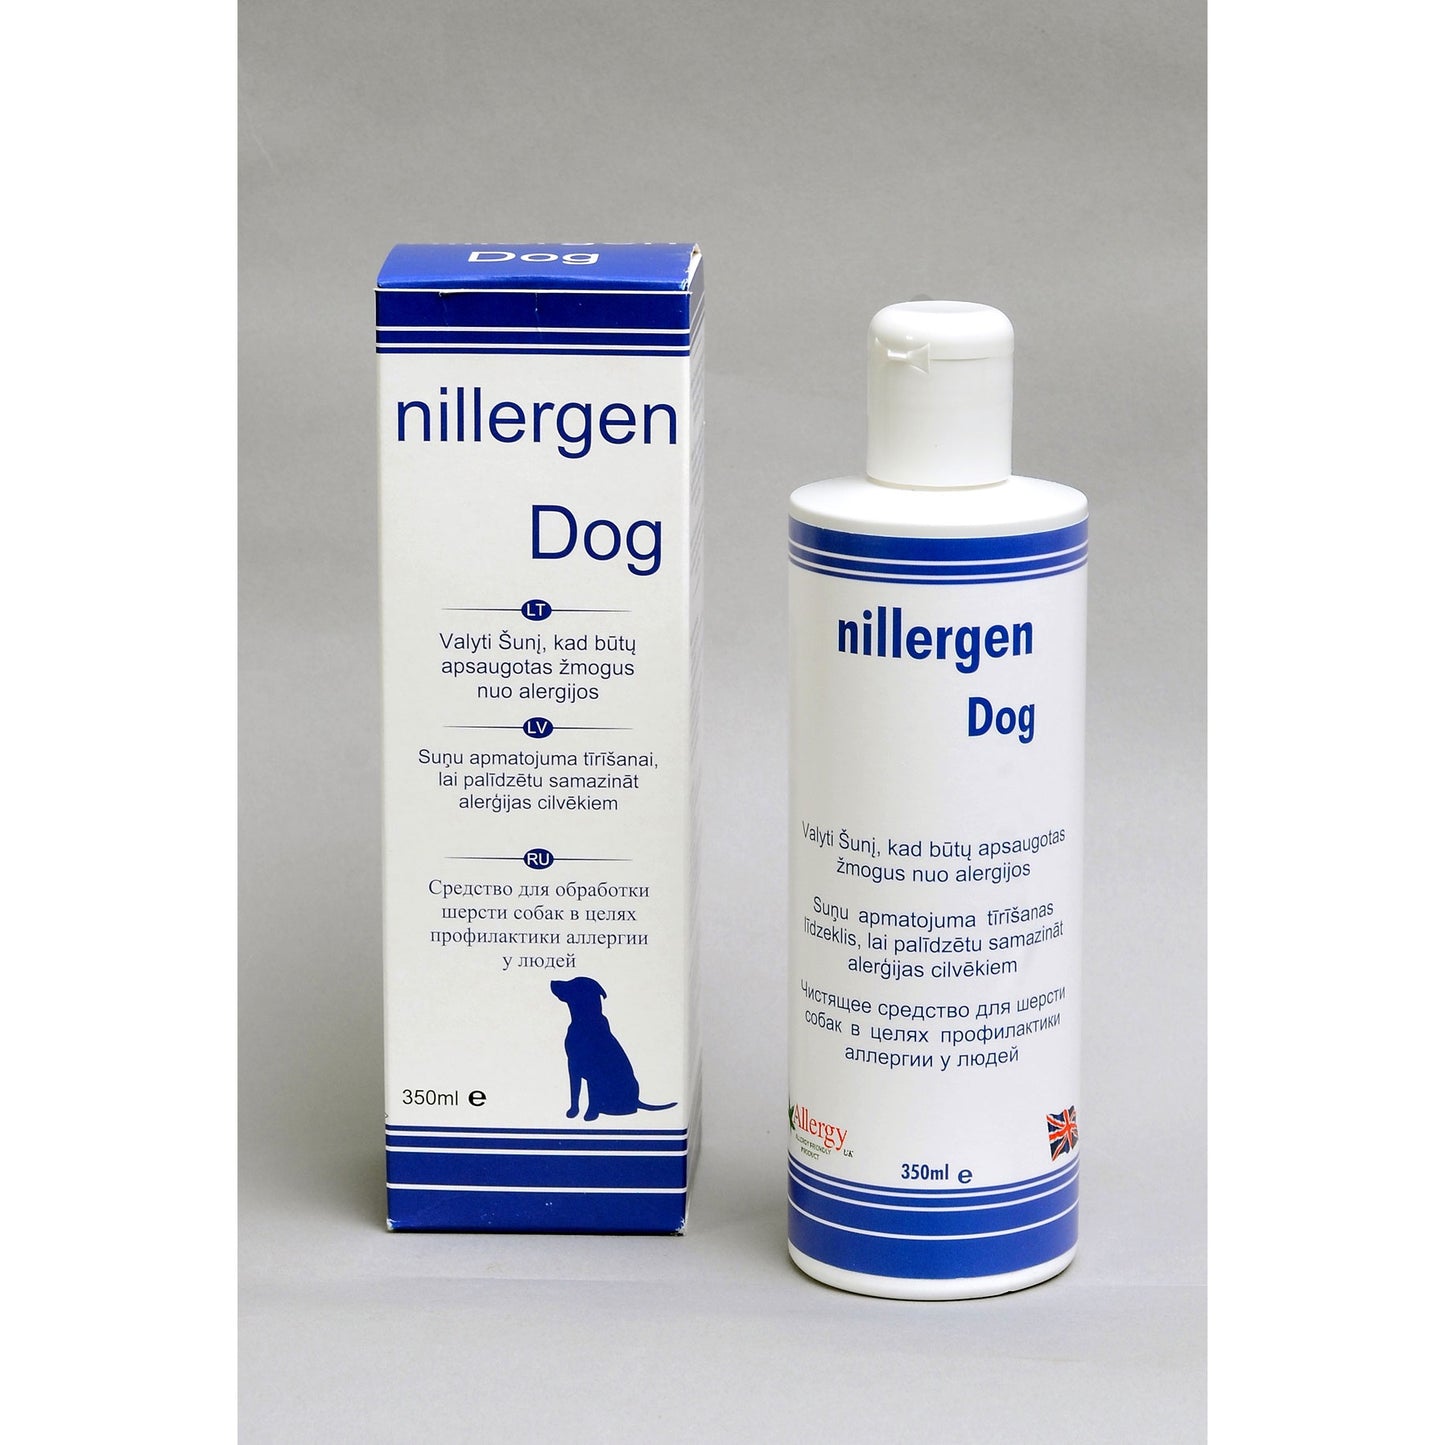 NILLERGEN Dog esant alergijai šunų kailiui